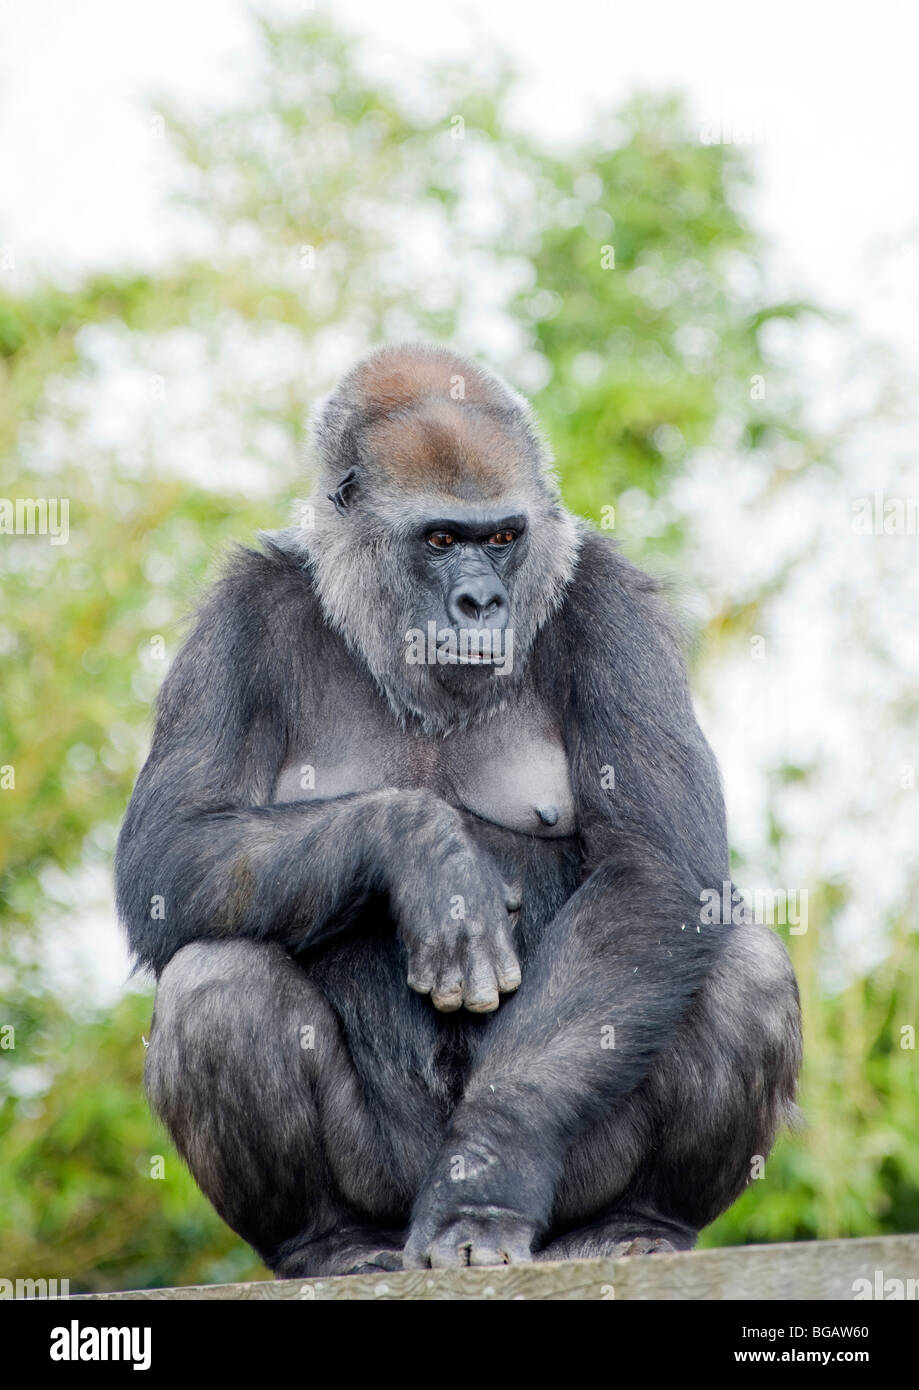 Female Gorilla Sitting on a Platform Stock Photo